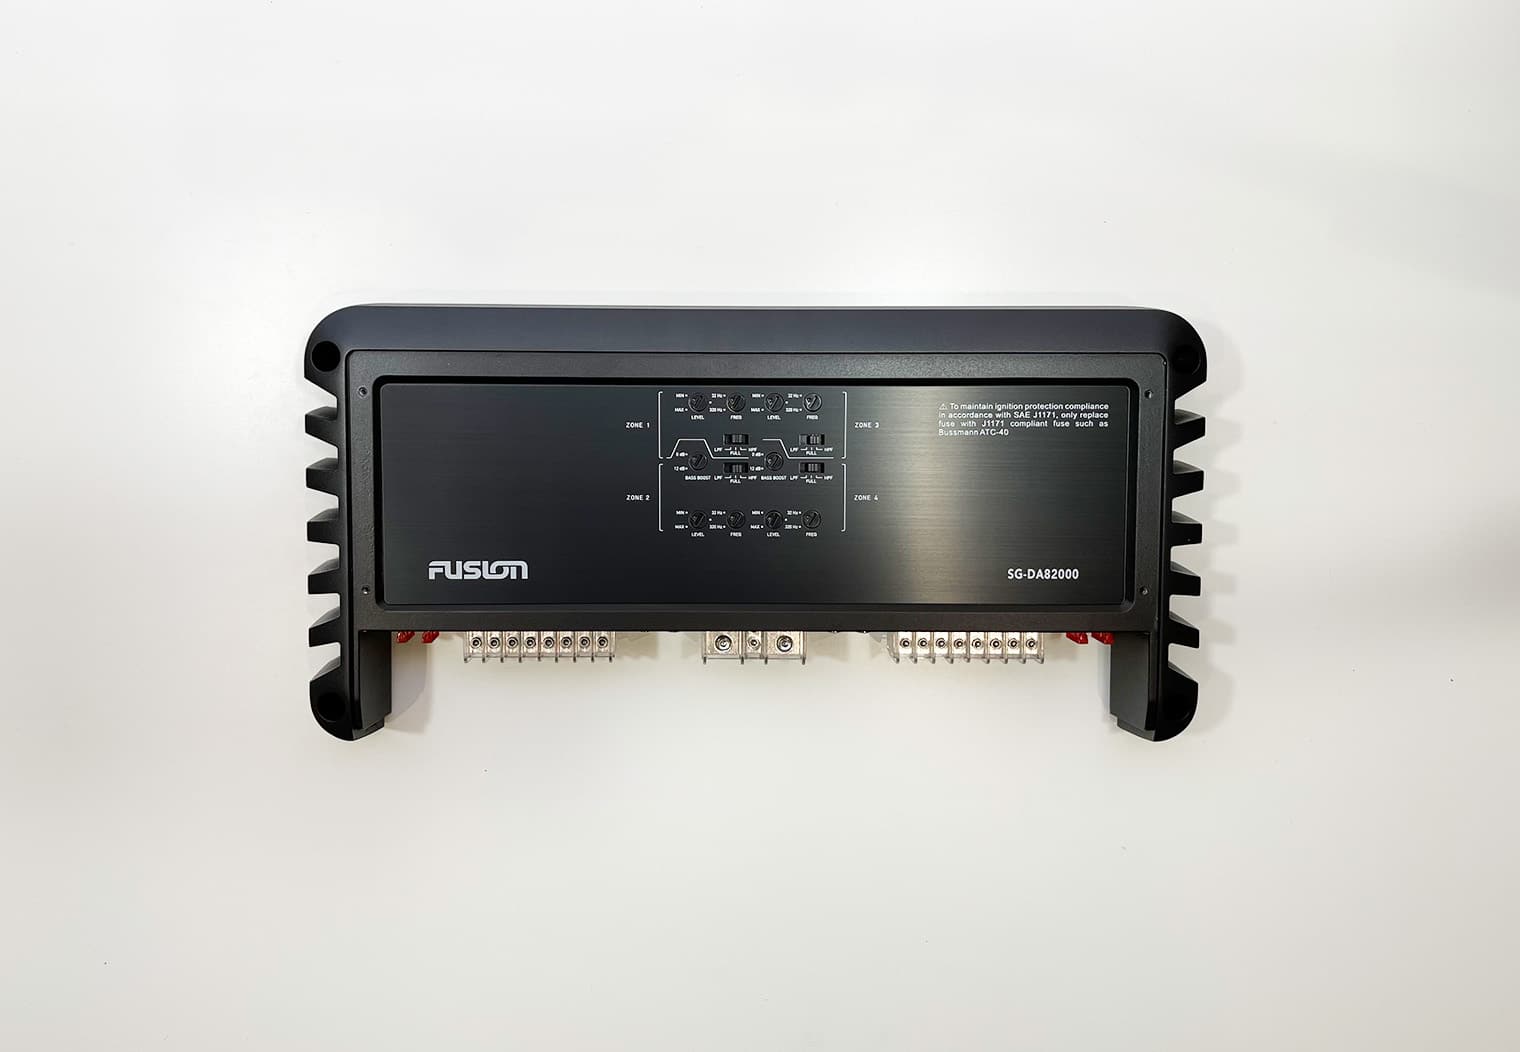 Fusion Signature Series 8 channel amplifier configuration panel